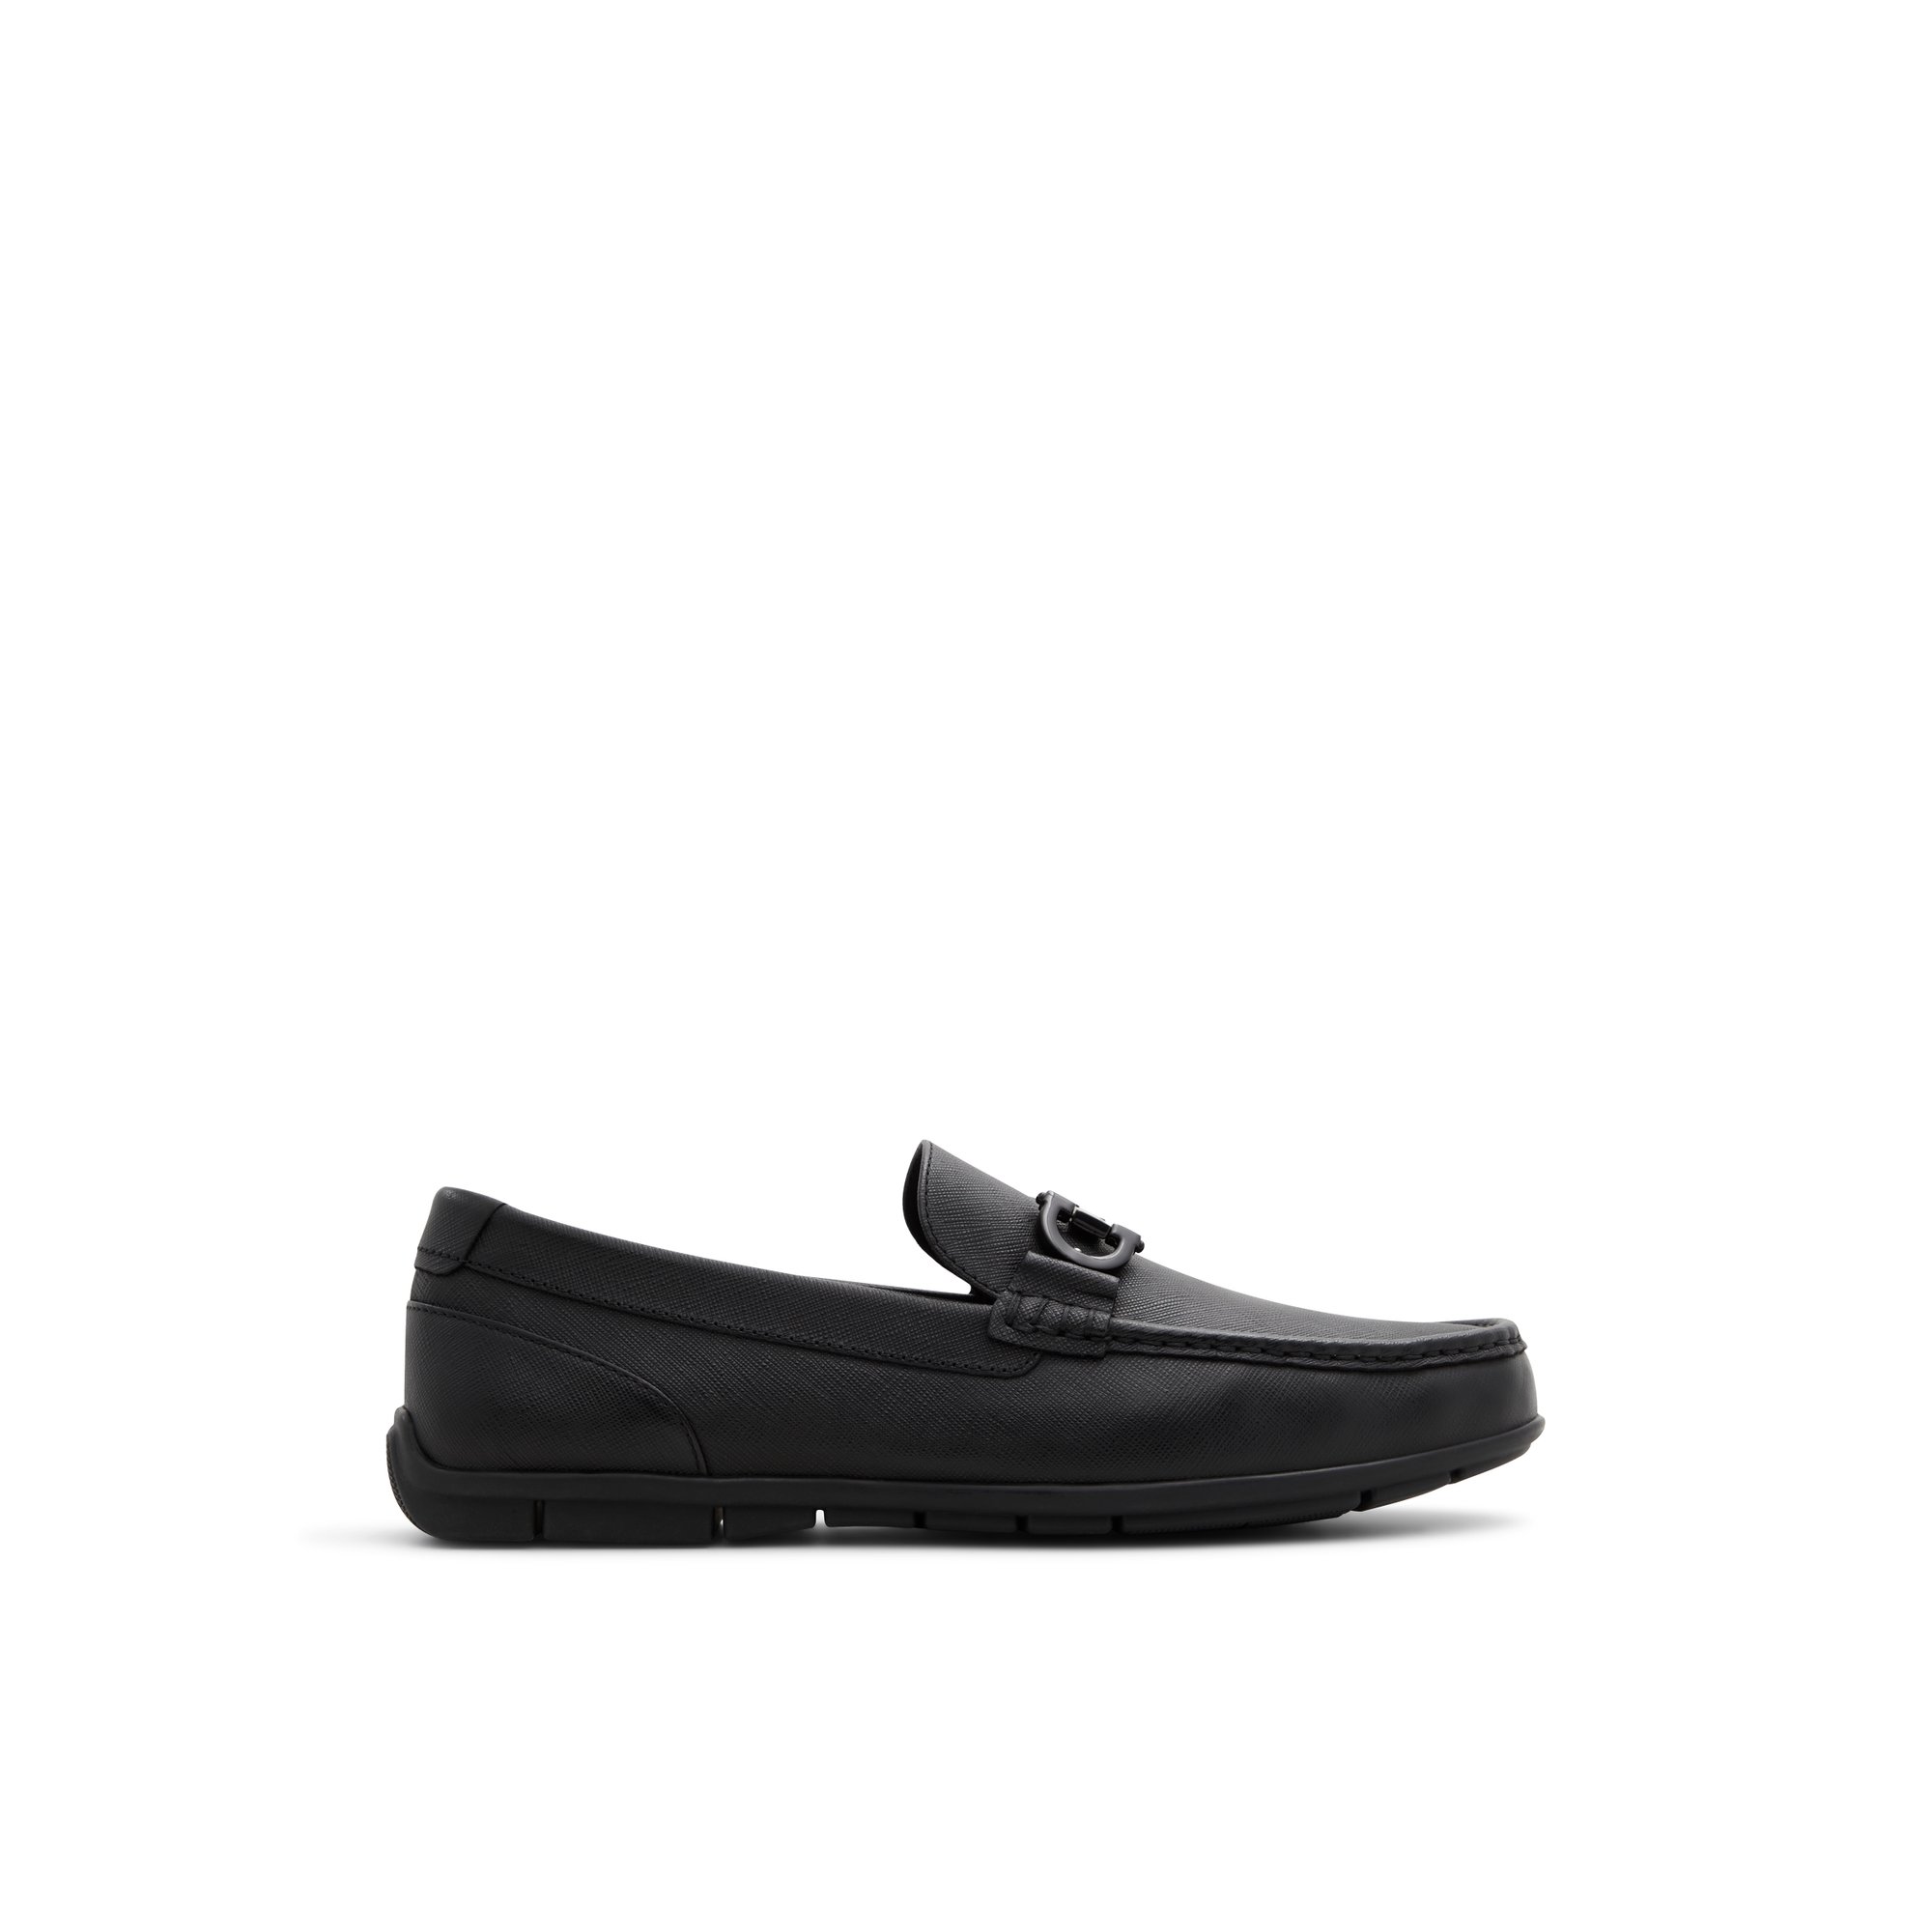 ALDO Orlovoflex - Men's Casual Shoes - Black